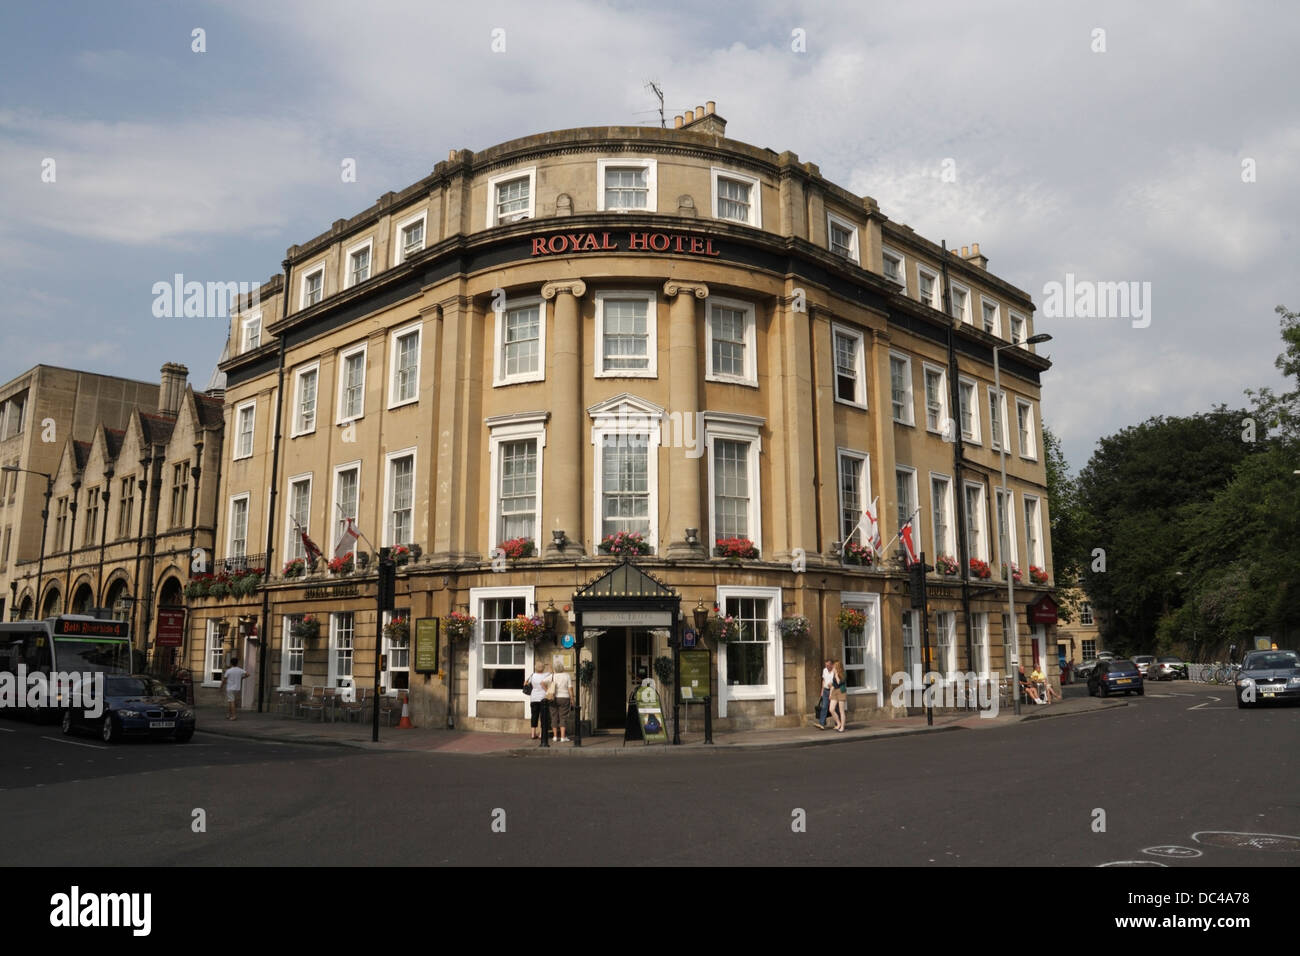 Royal Hotel in Bath city centre England UK Stock Photo